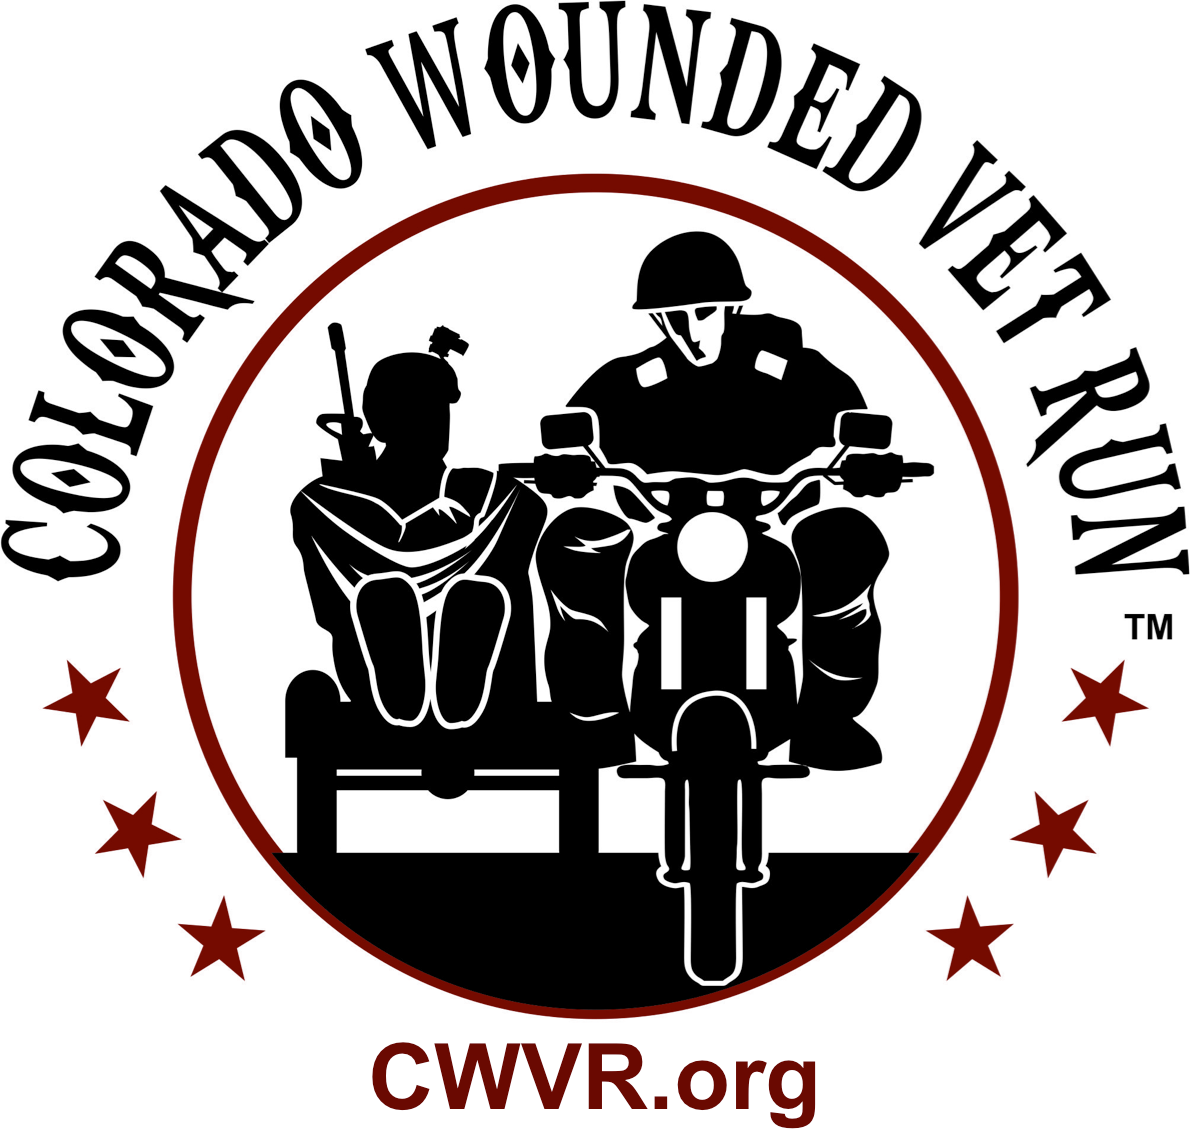 7th Annual Colorado Wounded Veteran’s Run